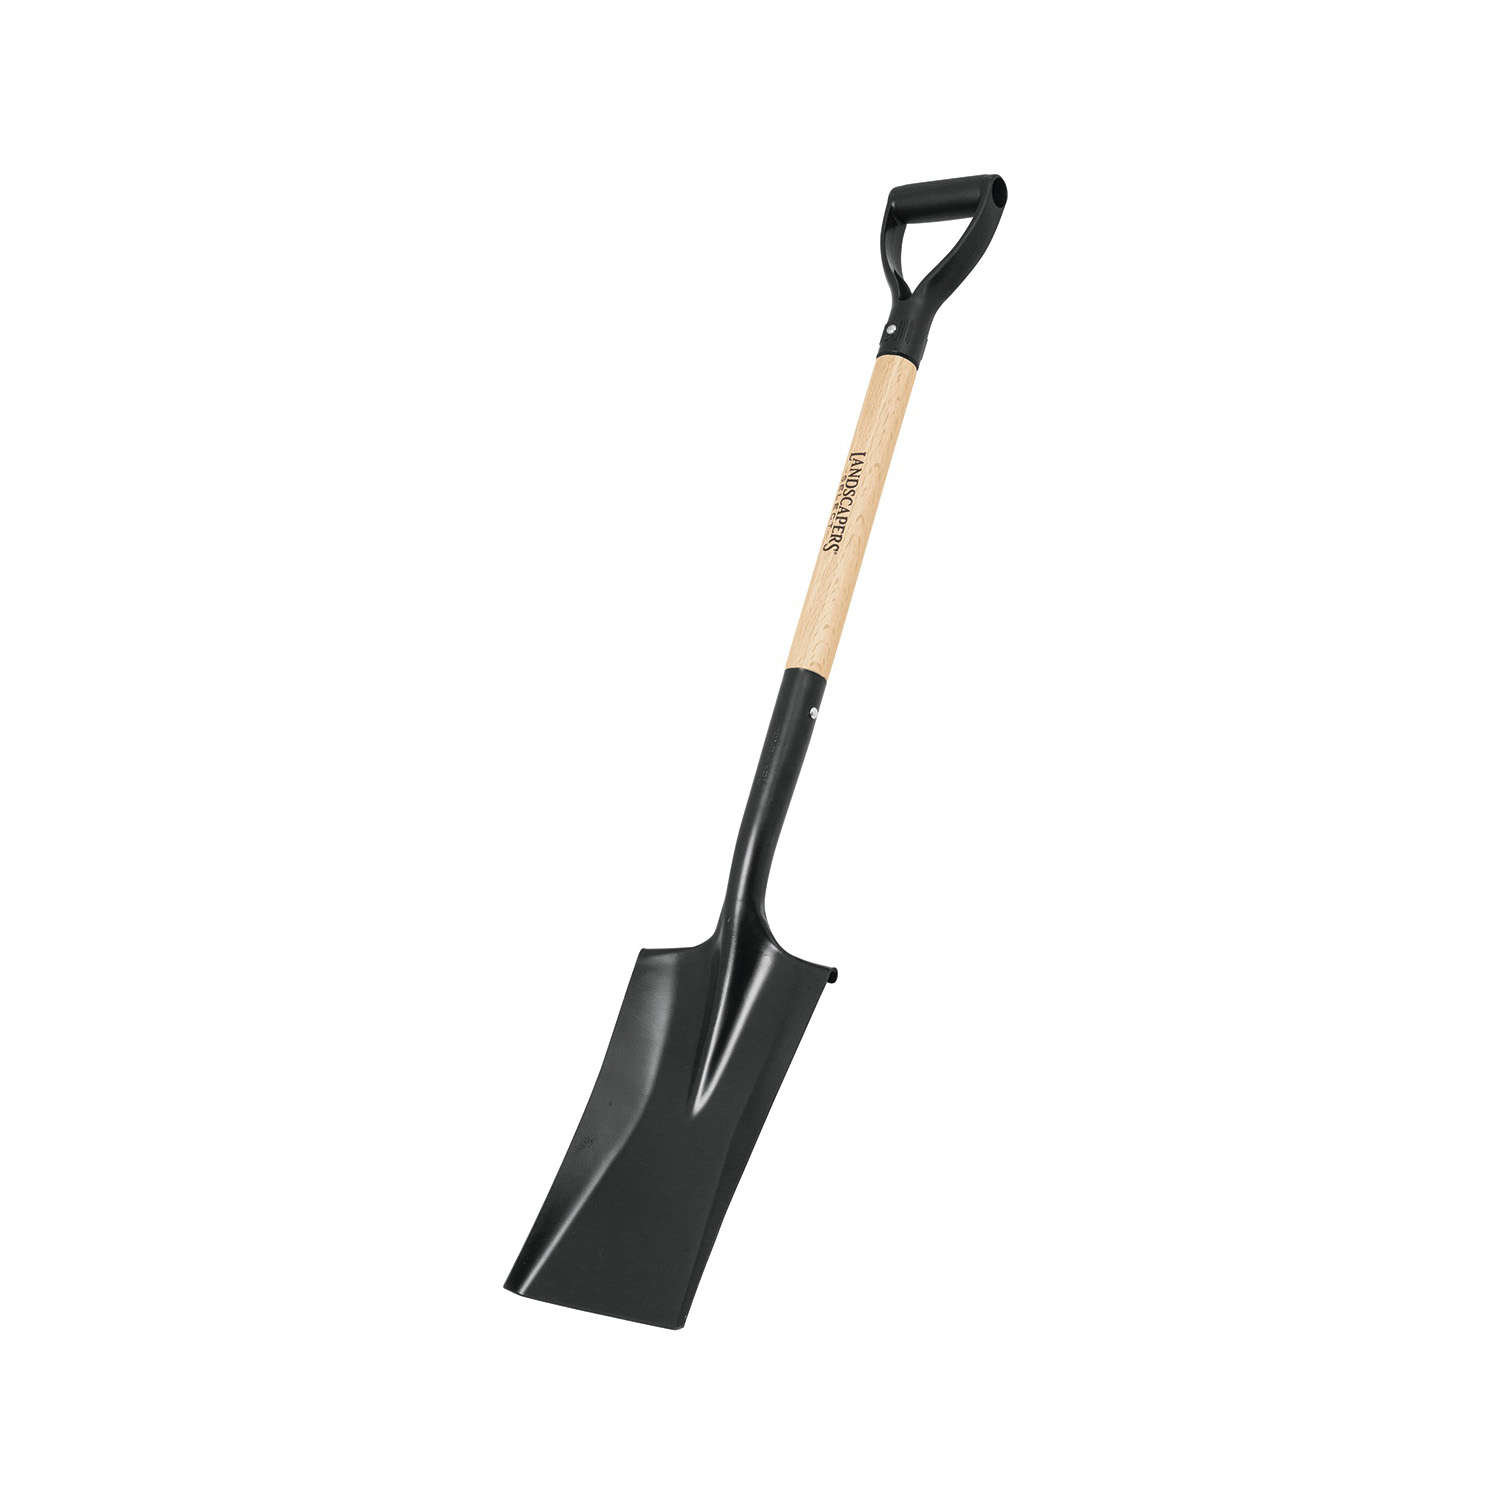 34449 Garden Spade Shovel, Steel Blade, Wood Handle, D-Shaped Handle, 28 in L Handle